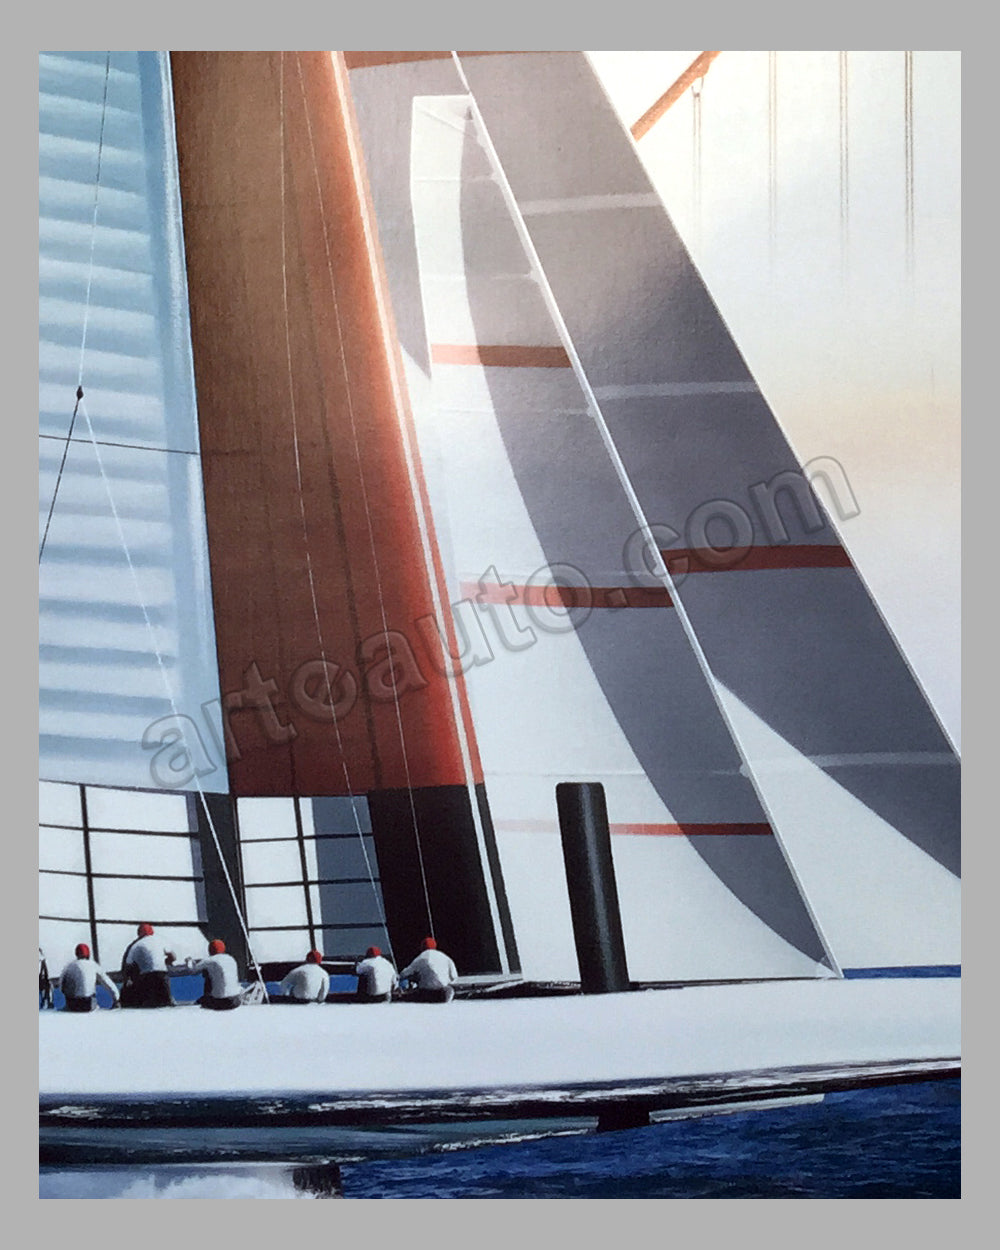 Razzia, 2002, Original Louis Vuitton Cup Sailing Poster, Auckland